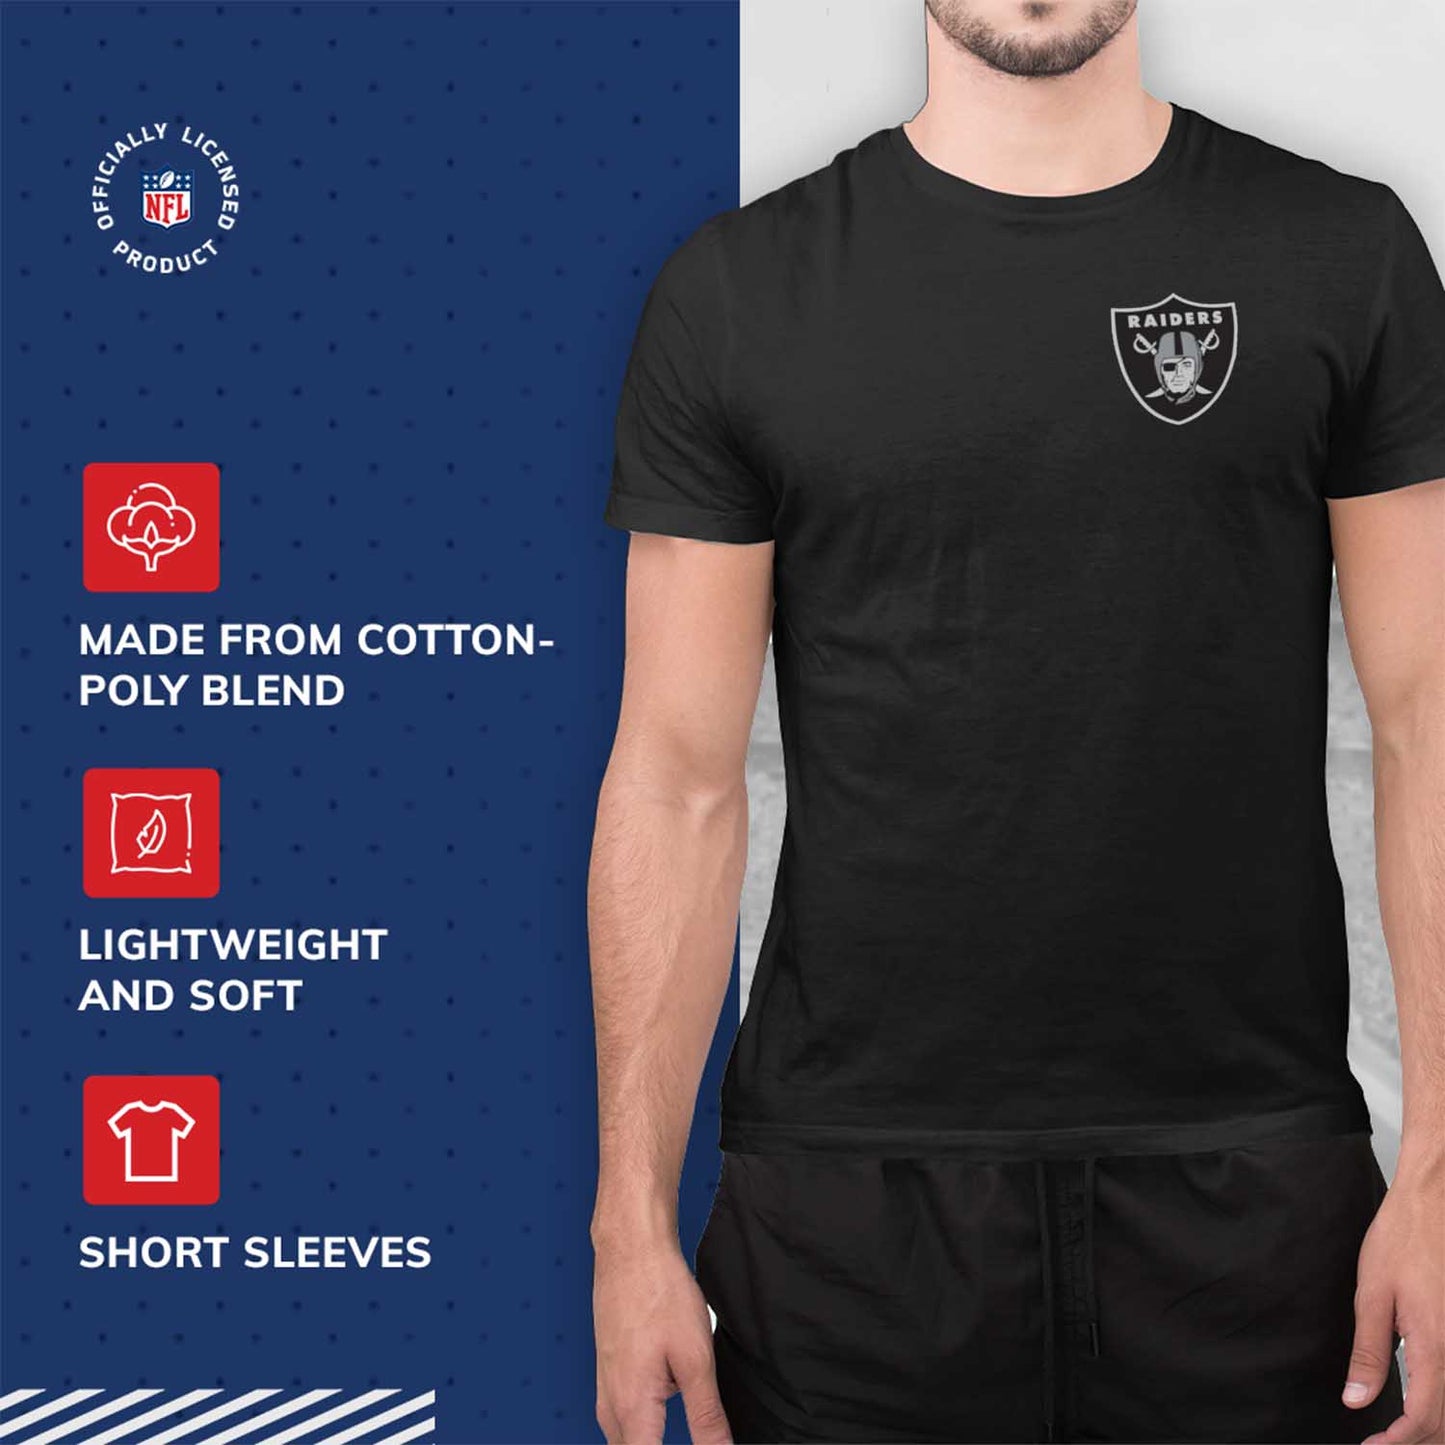 Las Vegas Raiders NFL Pro Football Final Countdown Adult Cotton-Poly Short Sleeved T-Shirt For Men & Women - Black